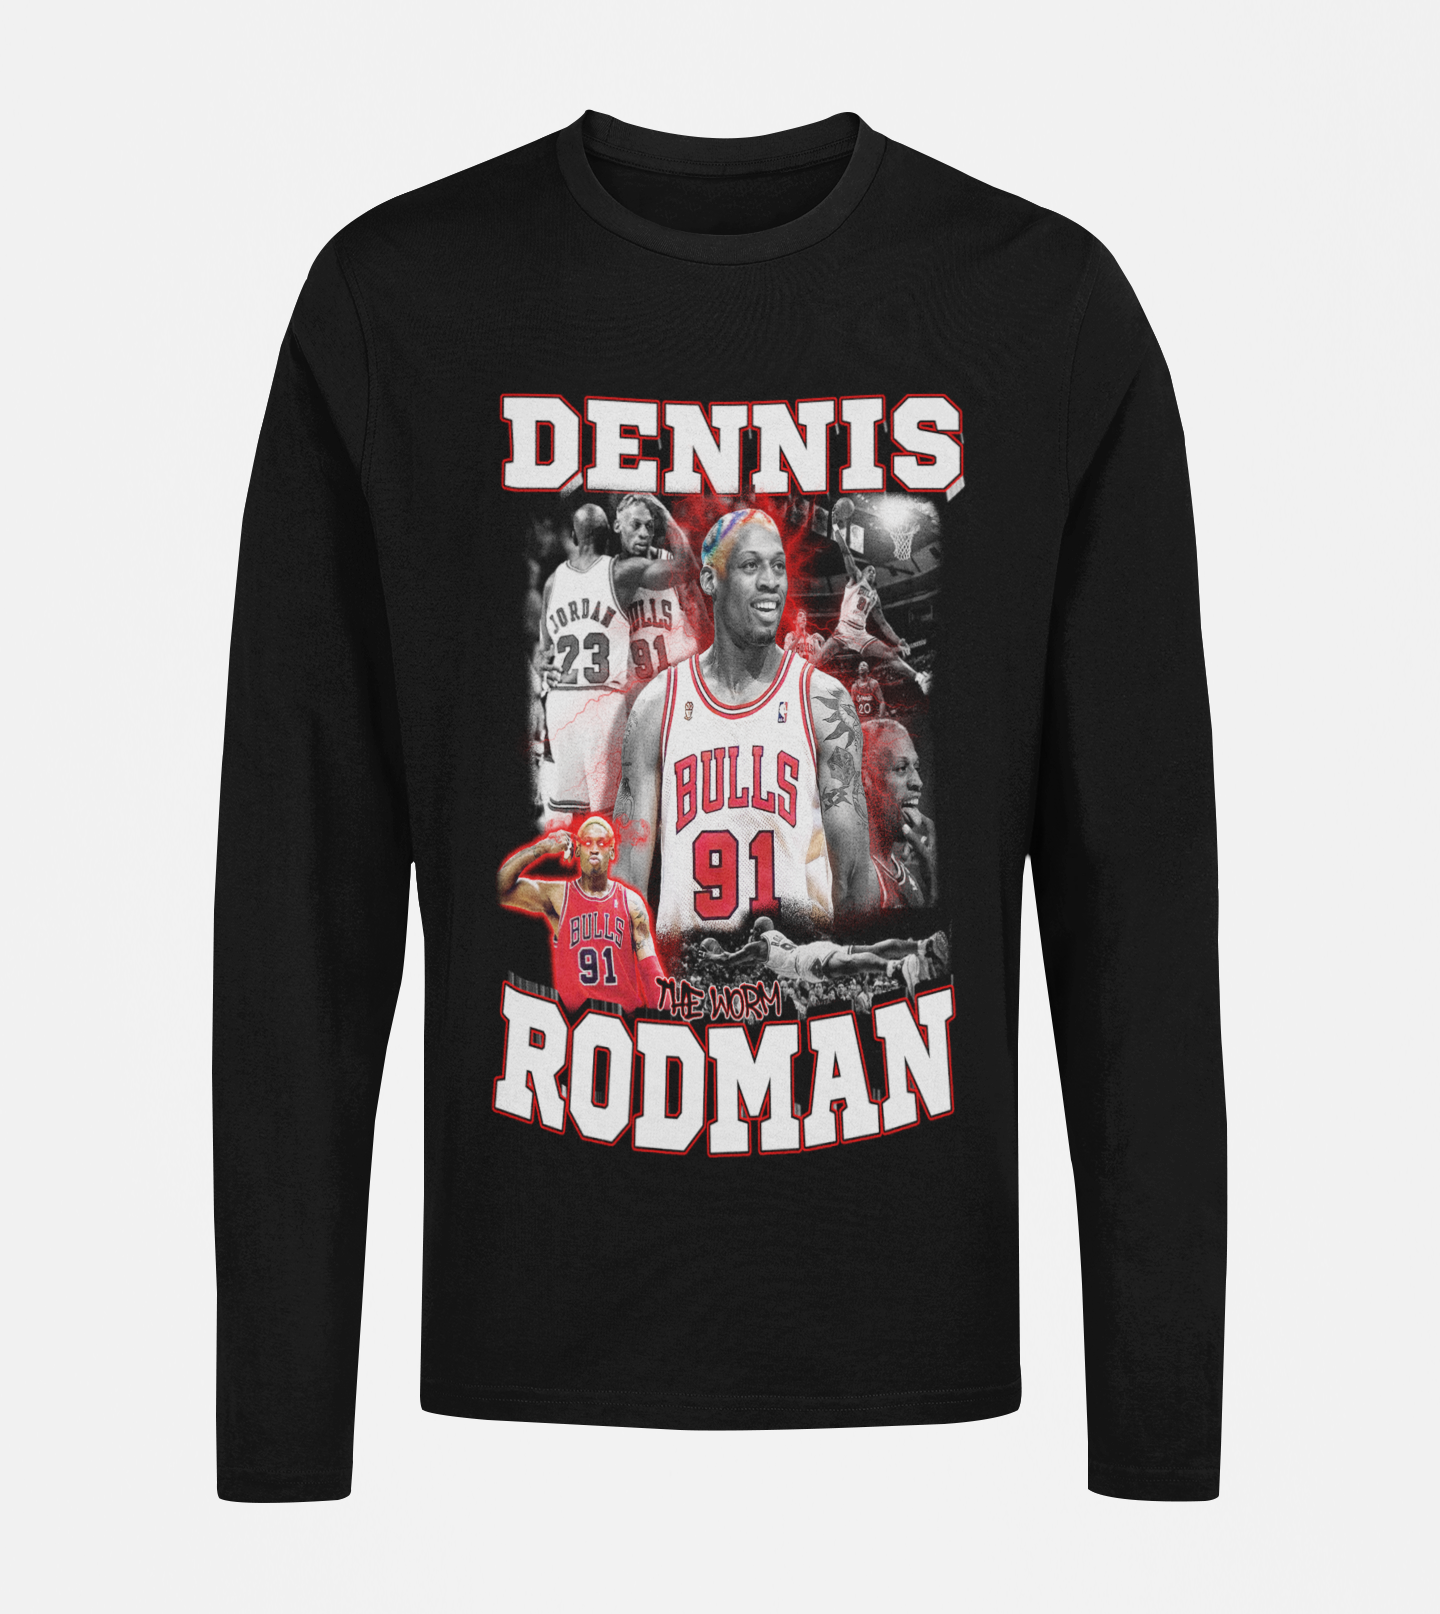 Dennis Rodman Shirt - The Rockstar Unisex Black Graphic T-Shirt (3XL)